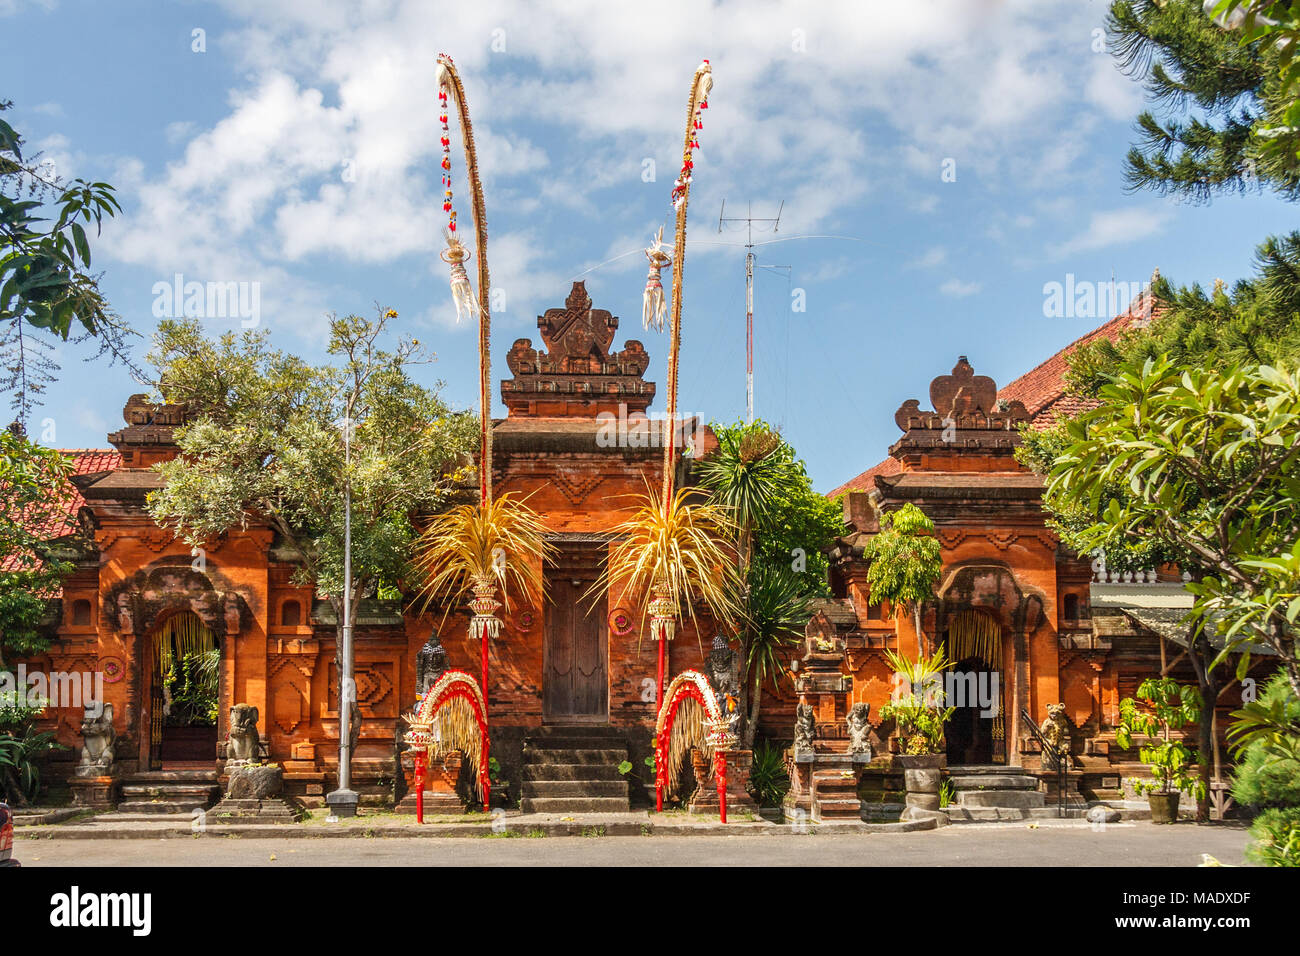 Hindu temple, Bali, Indonesia Stock Photo